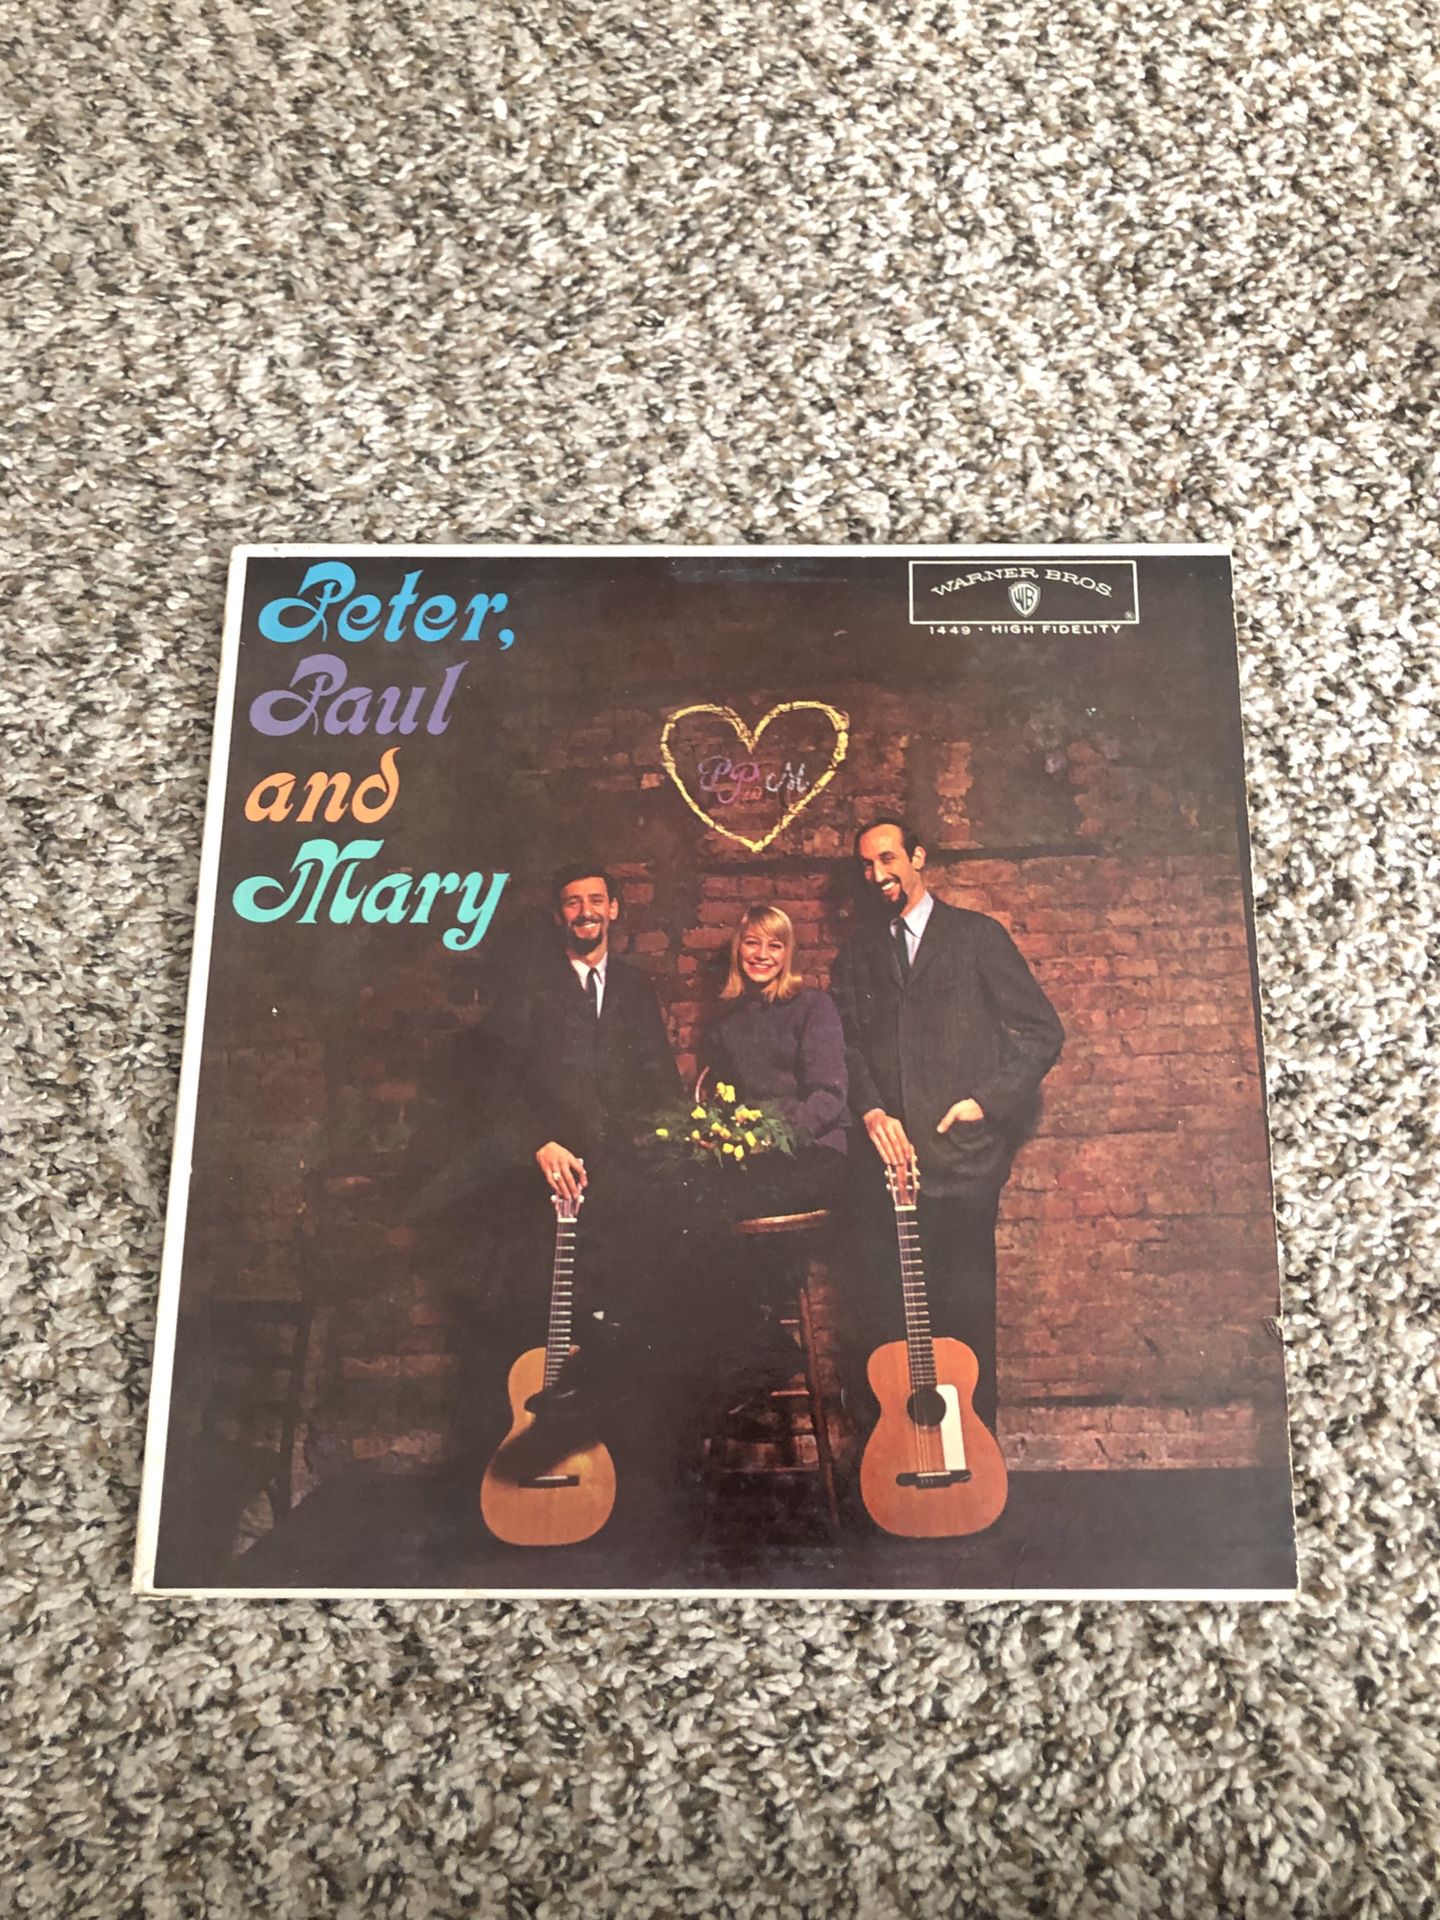 1962 Peter Paul and Mary vinyl album